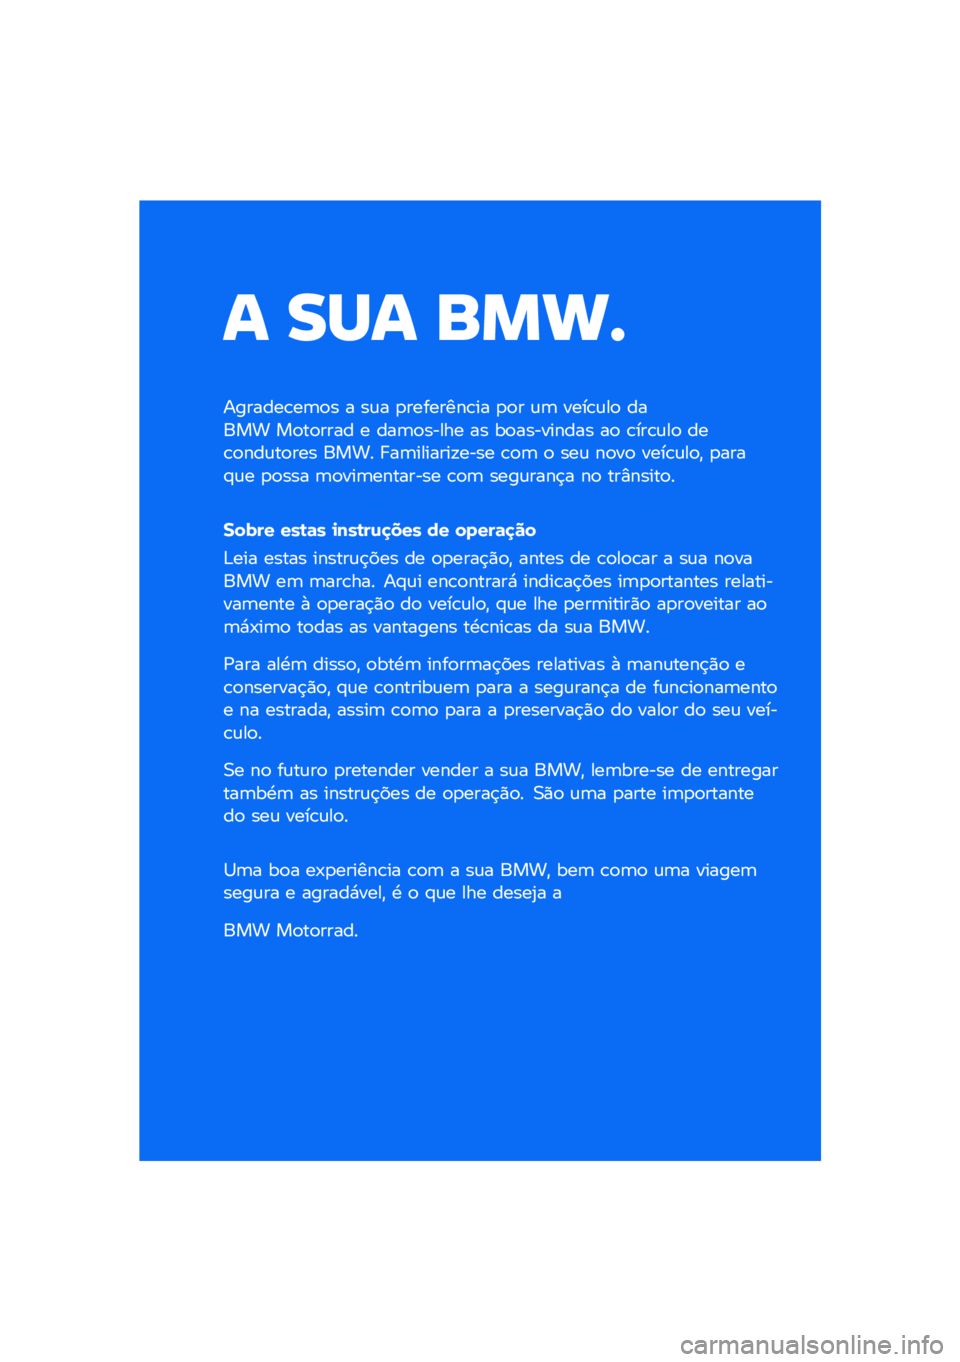 BMW MOTORRAD M 1000 RR 2021  Manual do condutor (in Portuguese) � ��� ����\b
�������\b��	�
� � ��\f� �
��������\b�� �
�
� �\f�	 ����\b�\f��
 ����� ��
��
���� � ���	�
����� �� ��
��������� ��
 �\b���